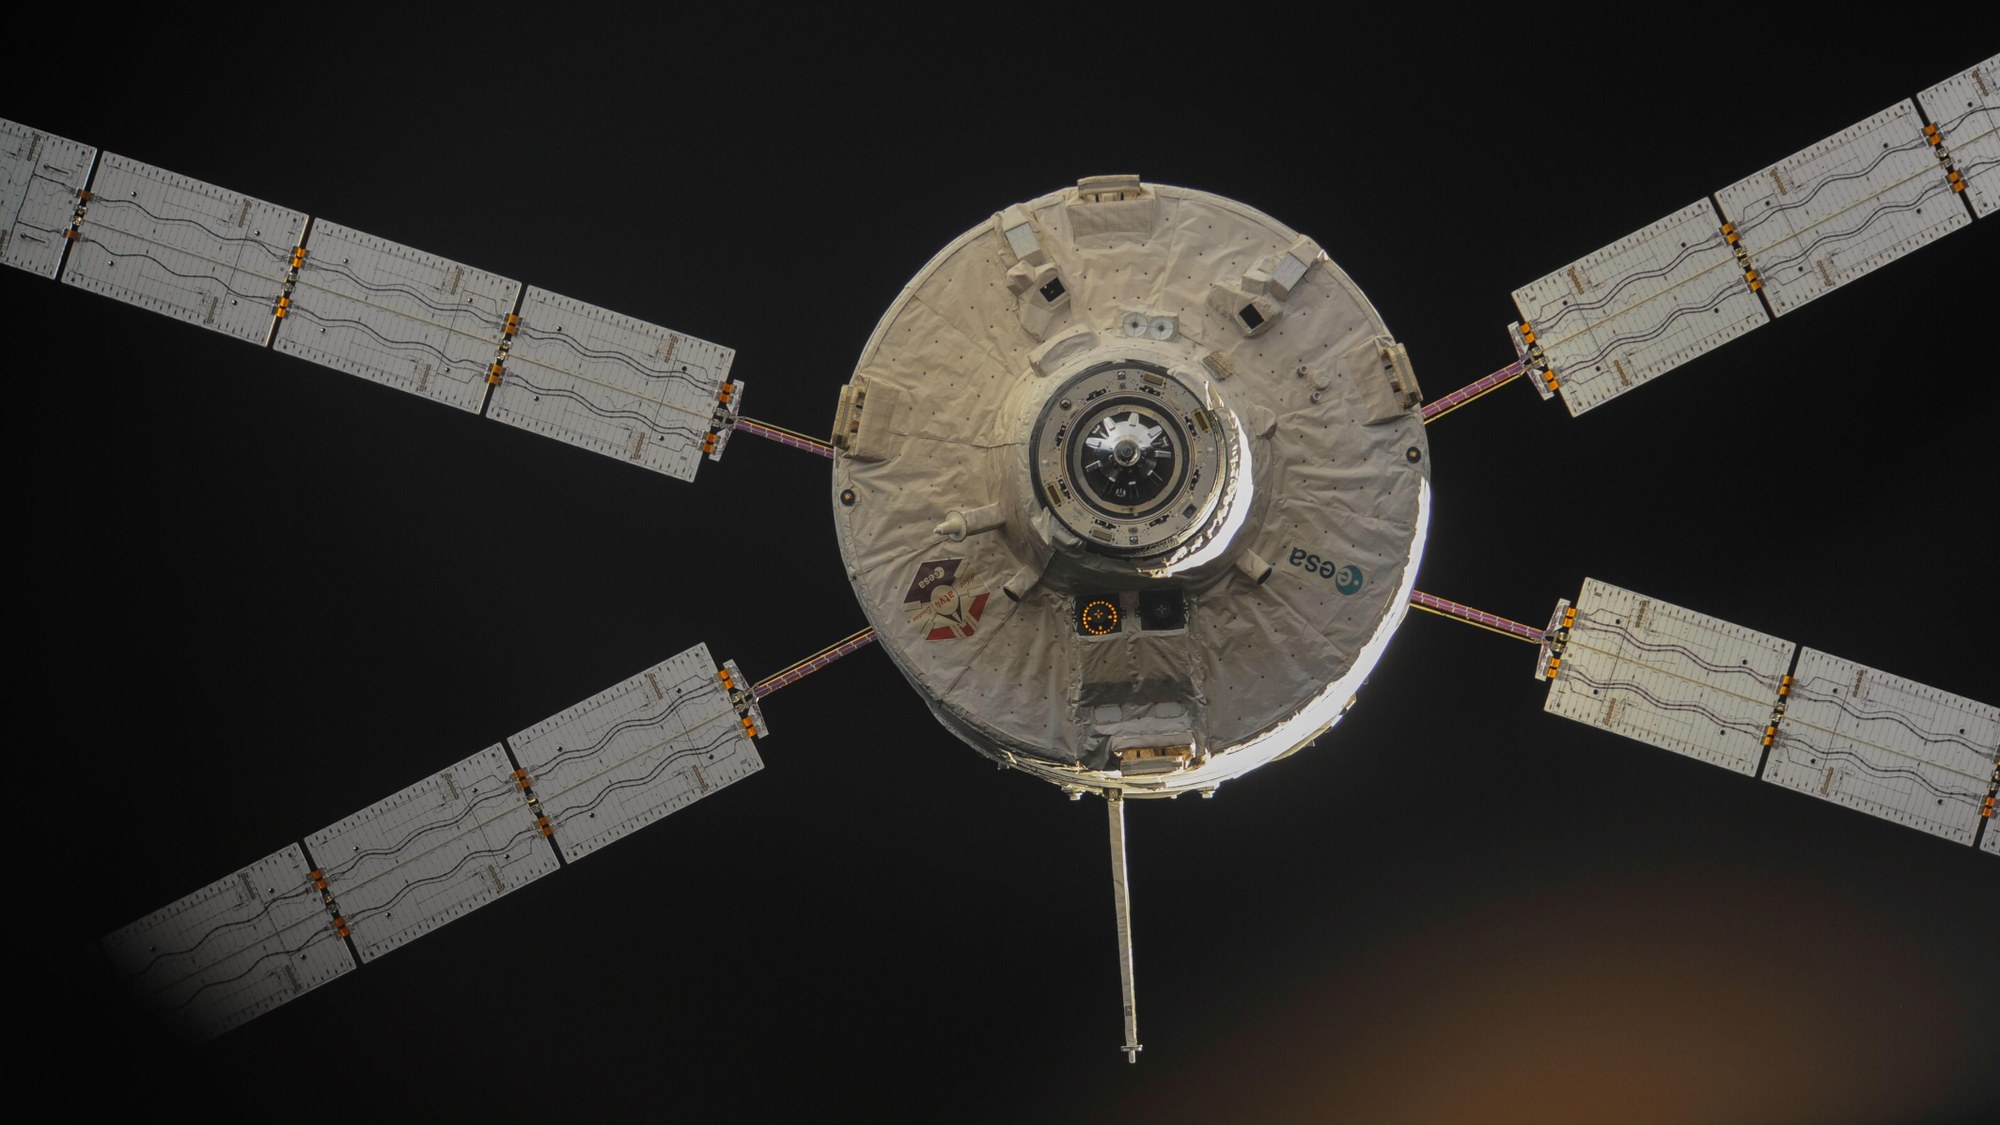 ATV 'Albert Einstein' leaves the ISS